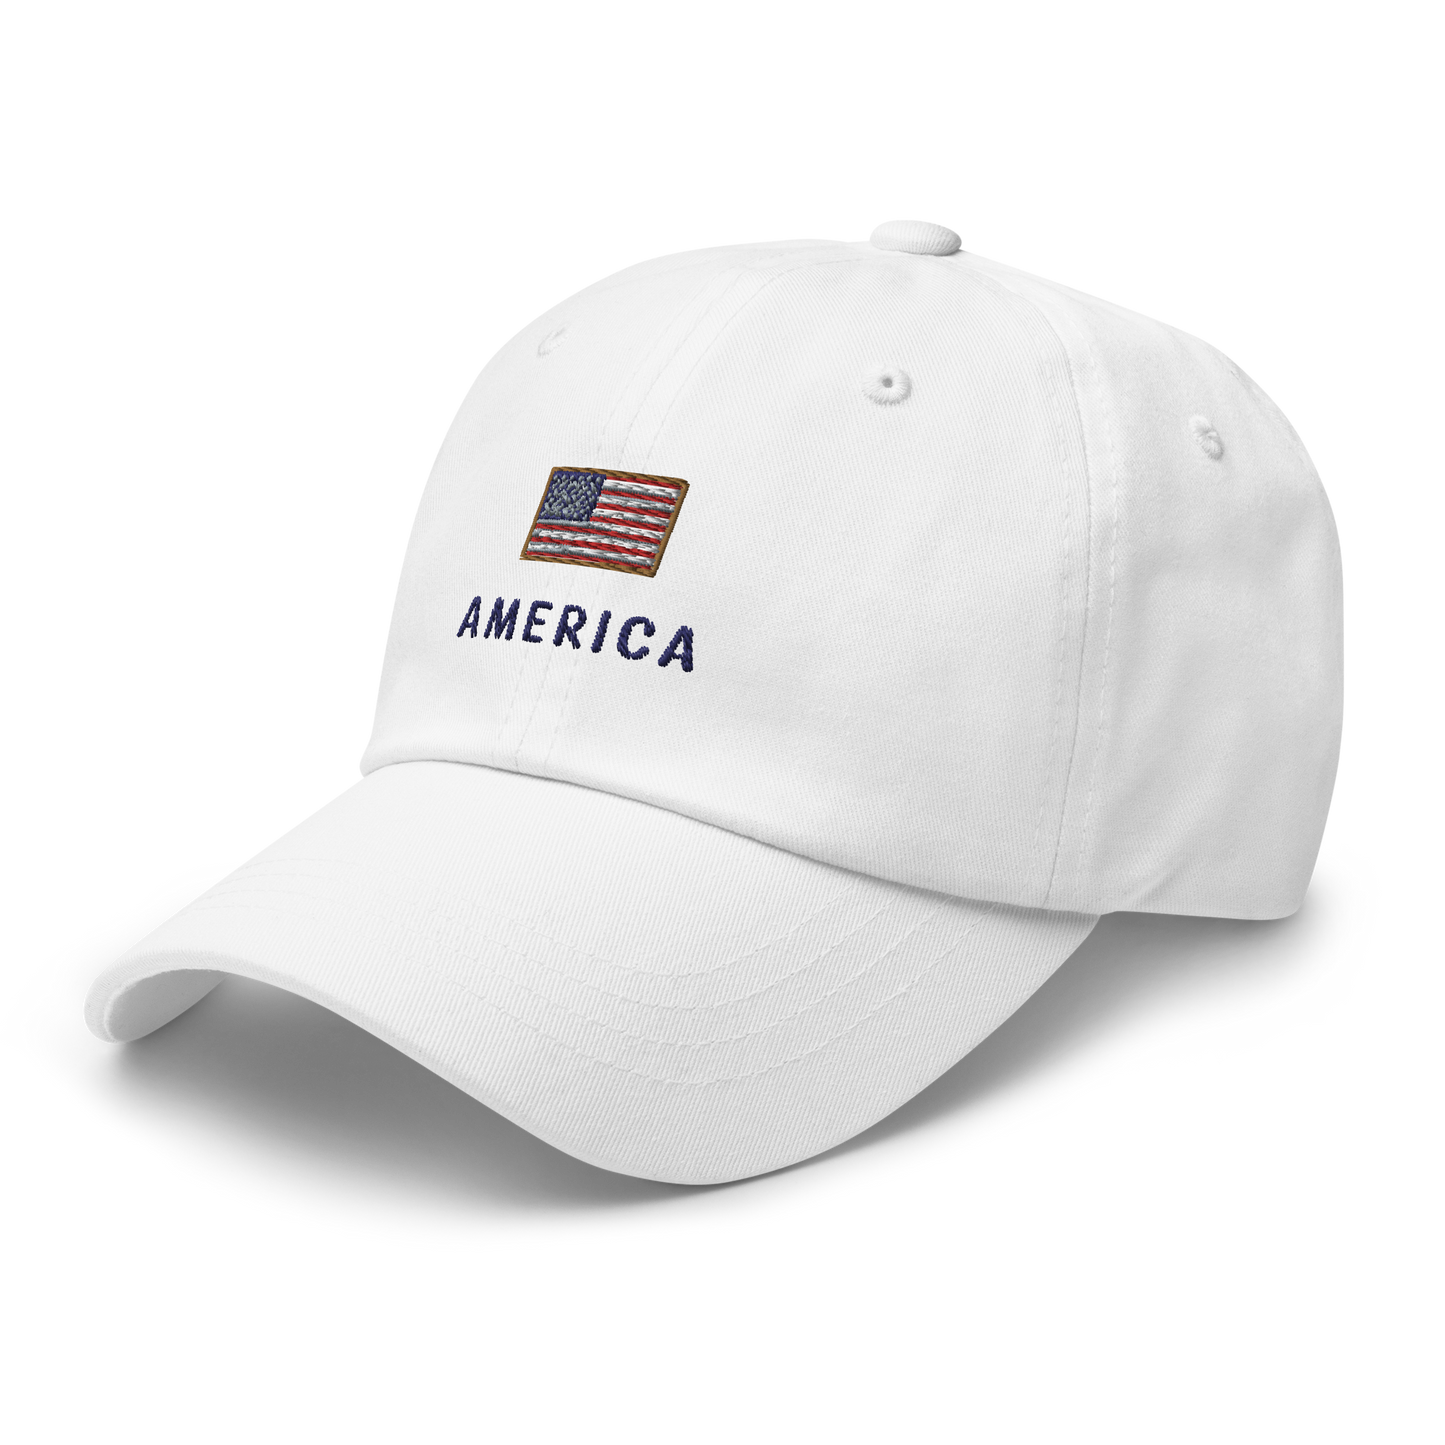 America Dad hat